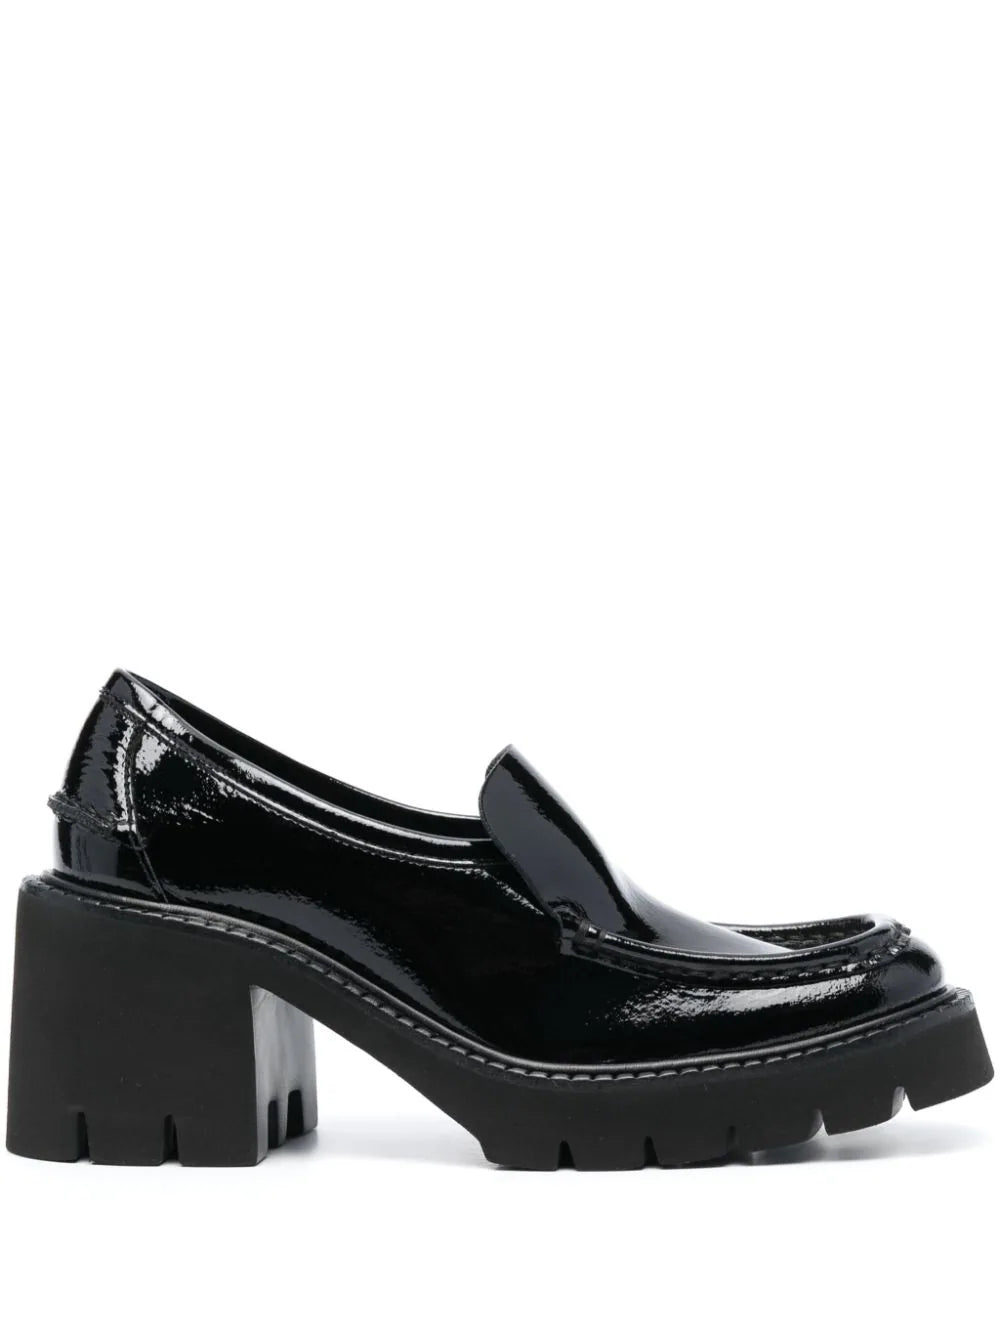 Augusta Heeled Loafer in Black Leather – Gabriela Hearst